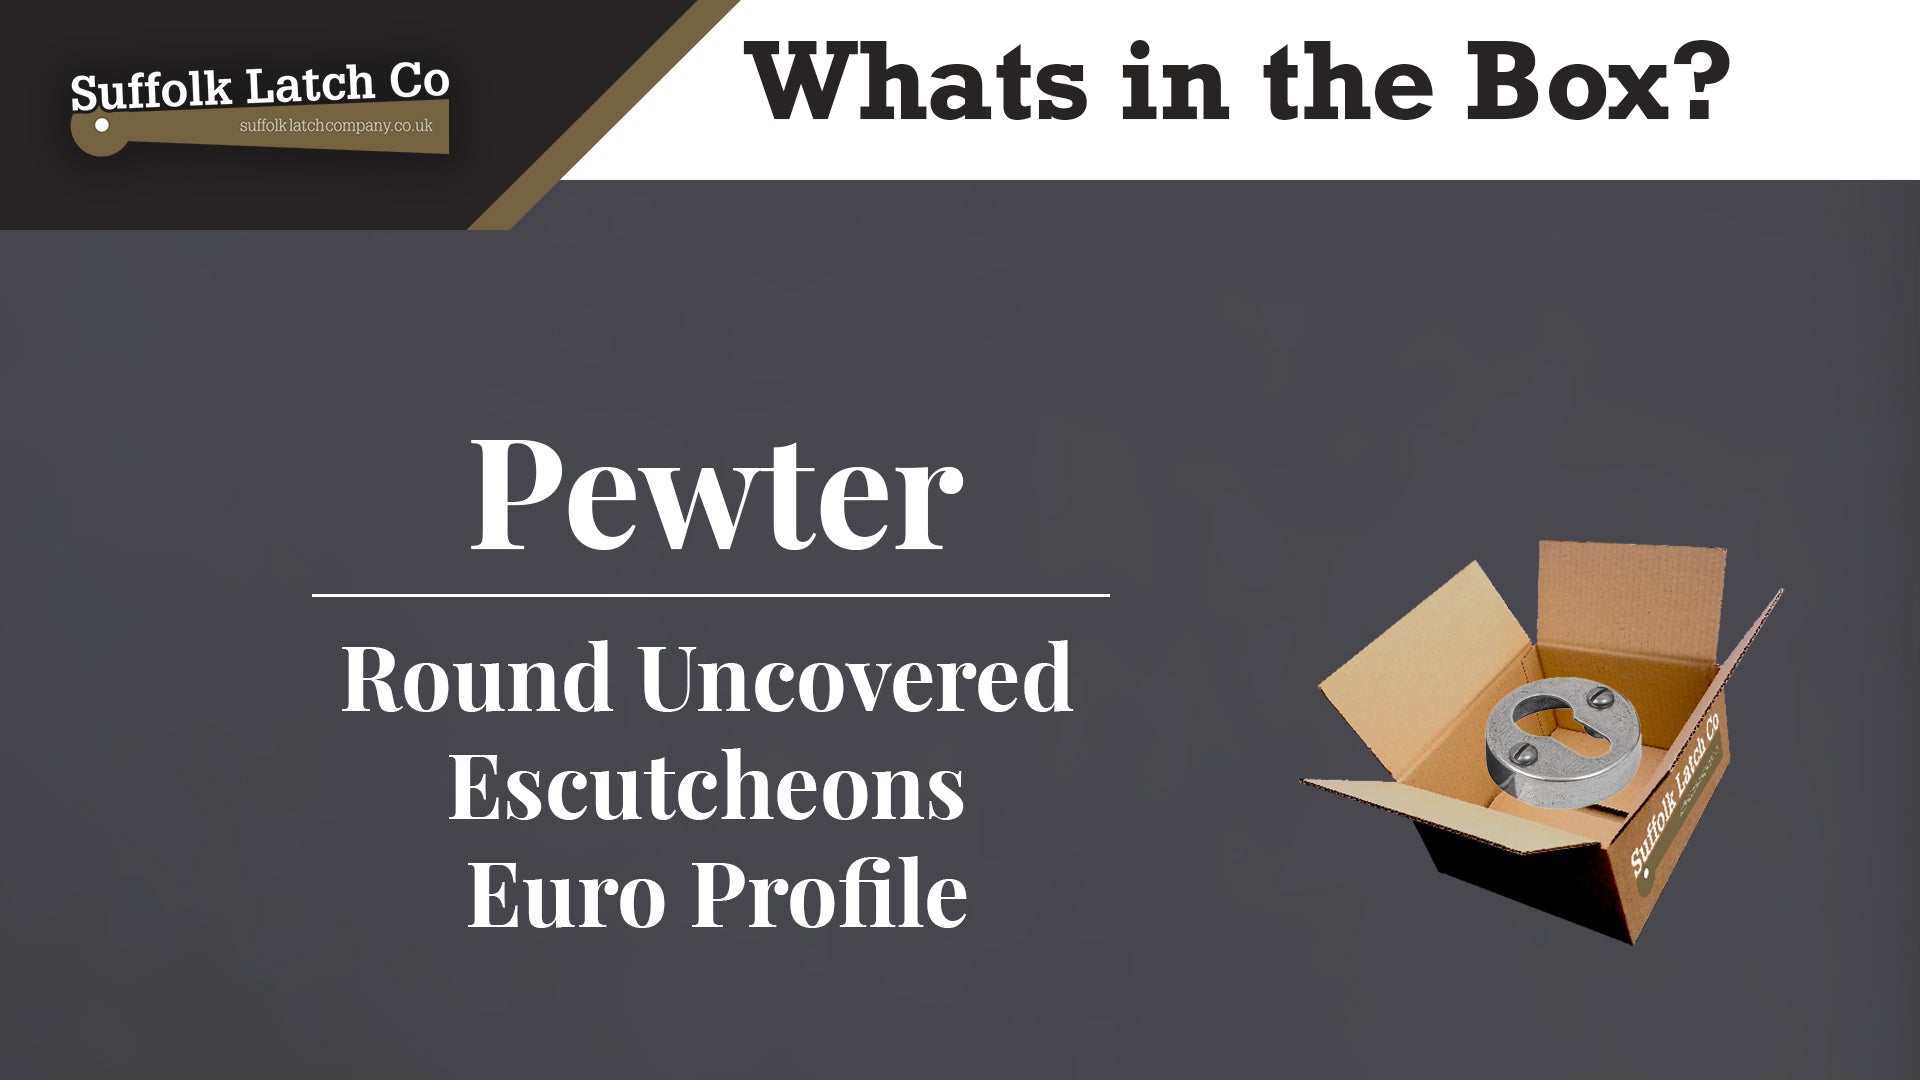 What's in the box? Uncovered Escutcheons Euro Profile